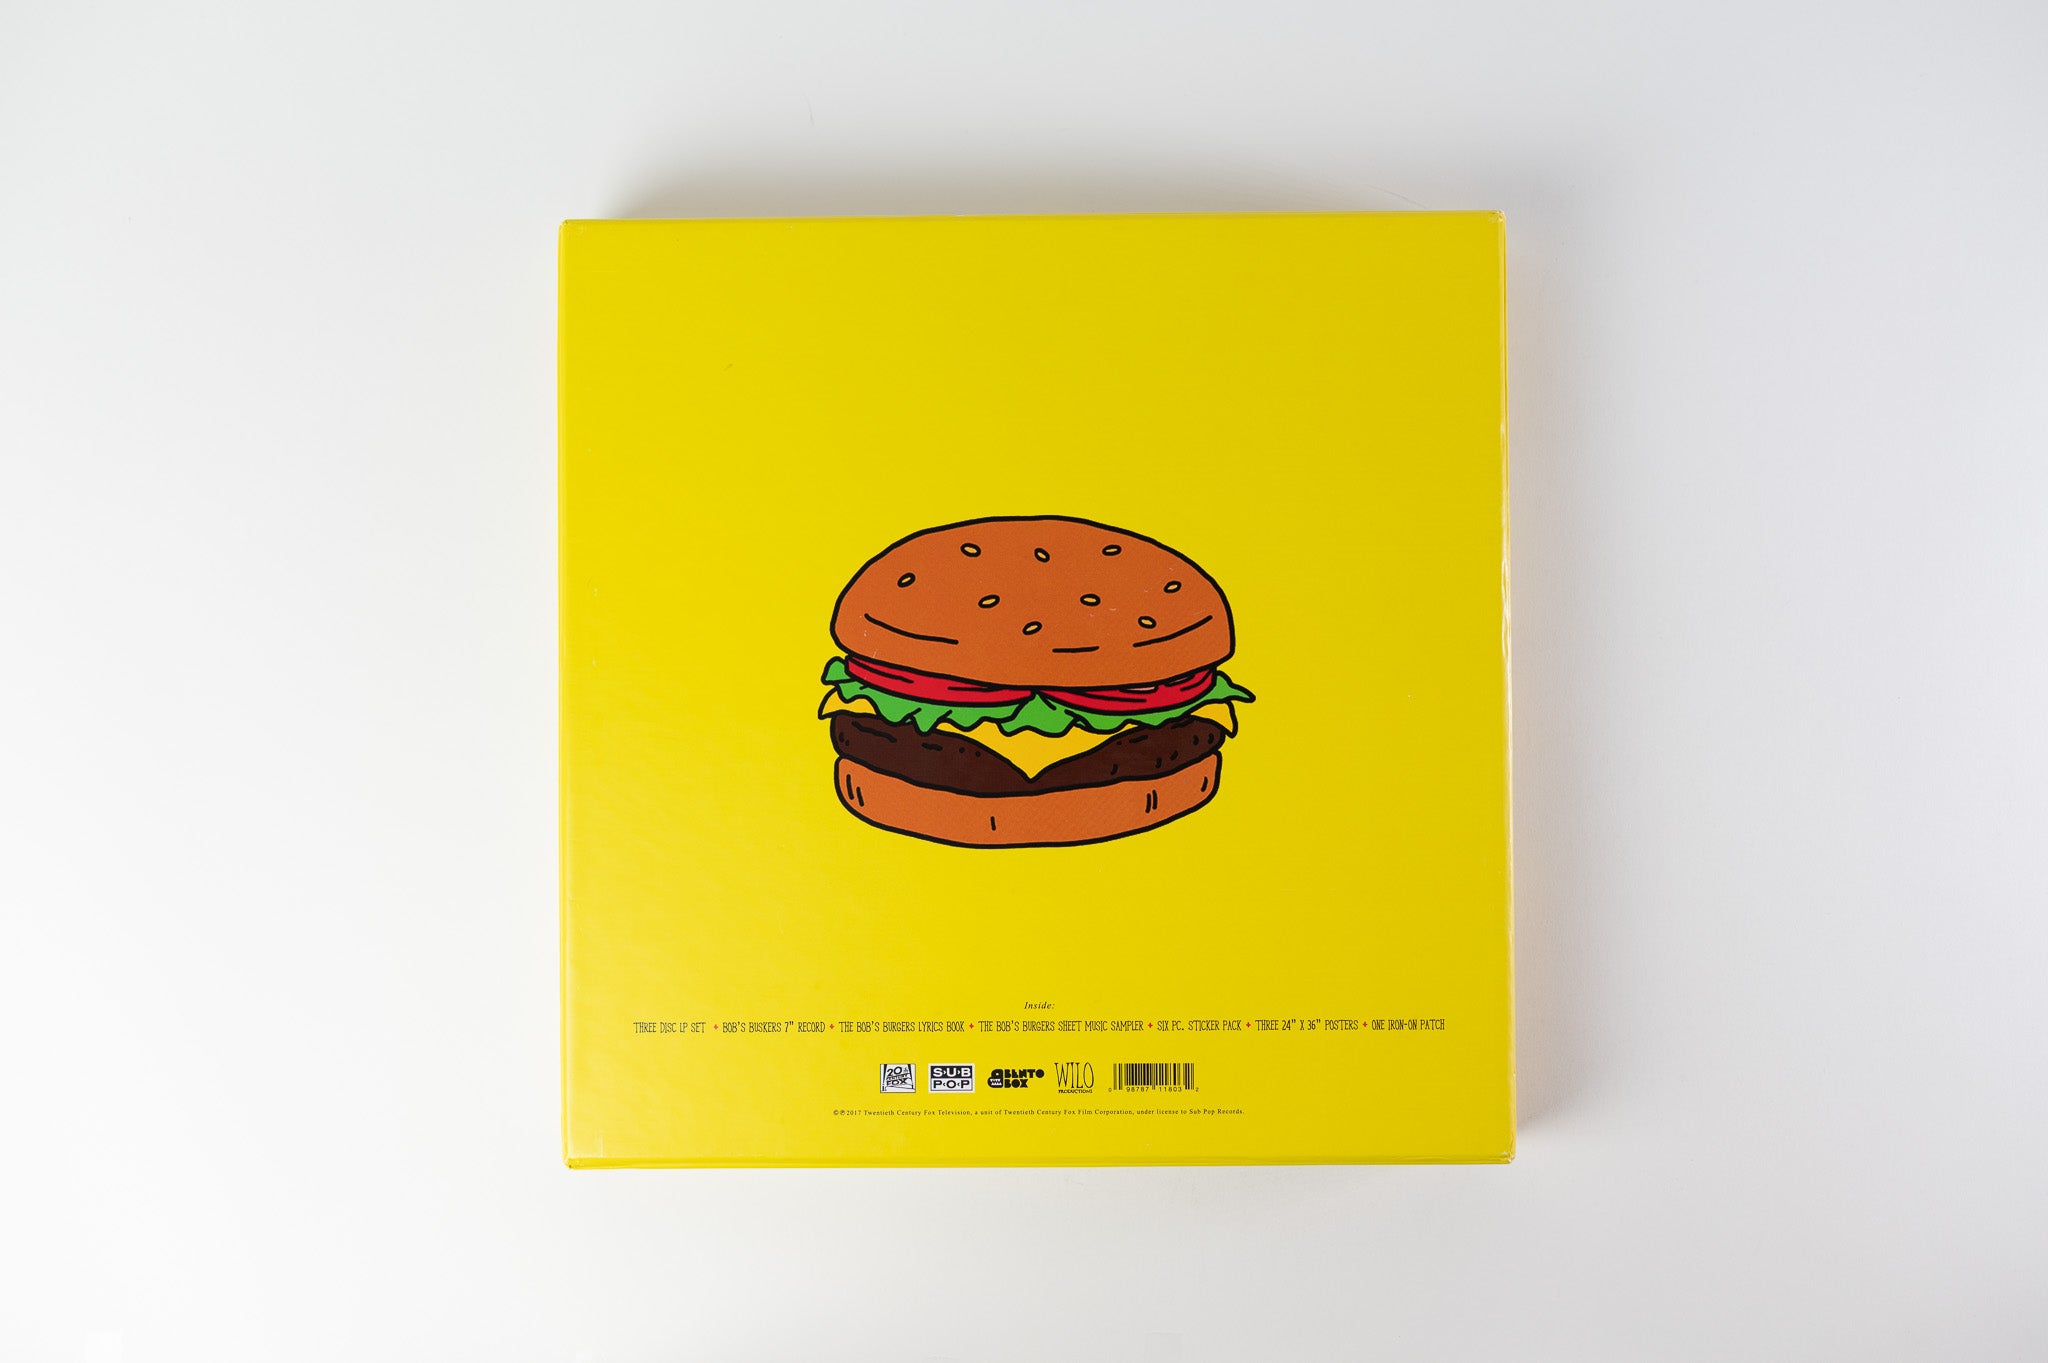 Bob's Burgers - The Bob's Burgers Music Album on Sub Pop Deluxe Ltd Colored Vinyl Box Set